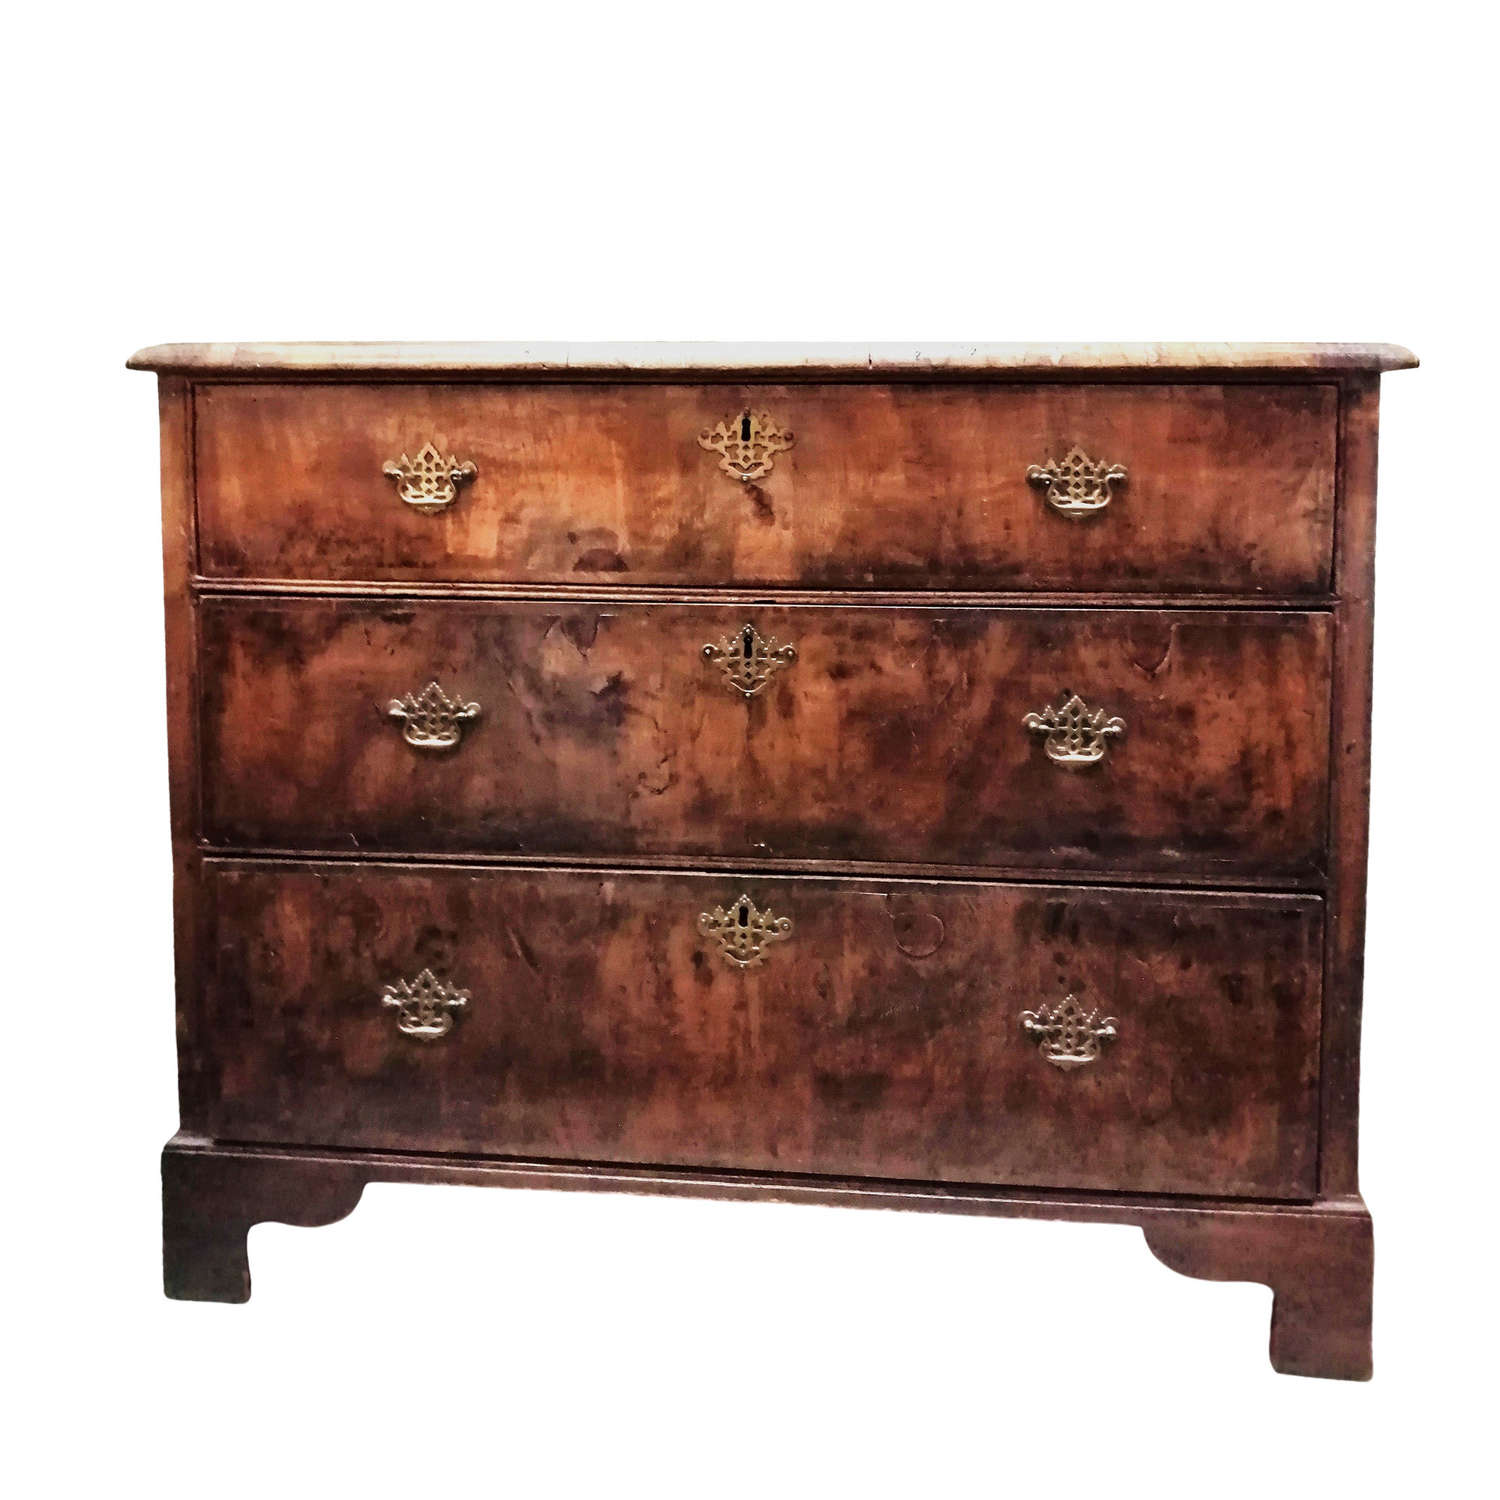 An 18th century figured pollard oak chest of drawers